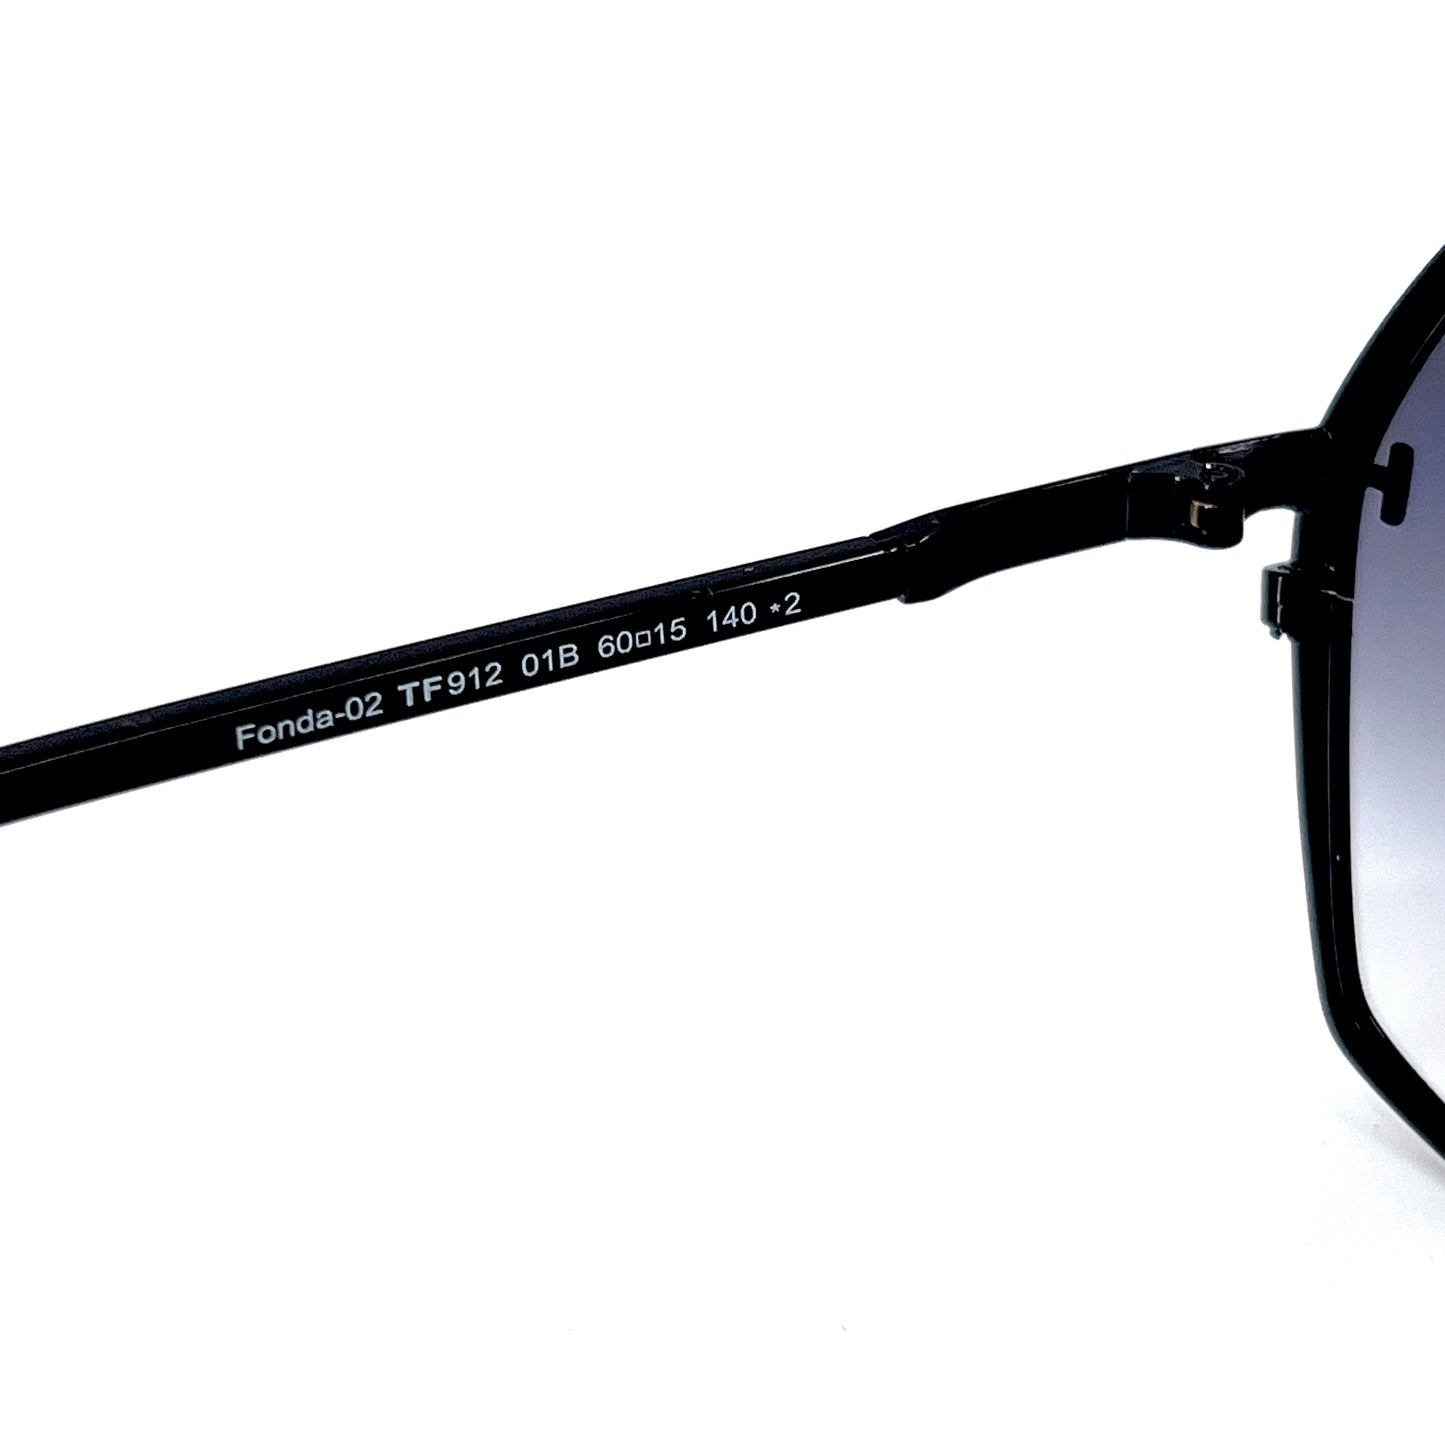 TOM FORD Fonda-02 Sunglasses TF912 01B